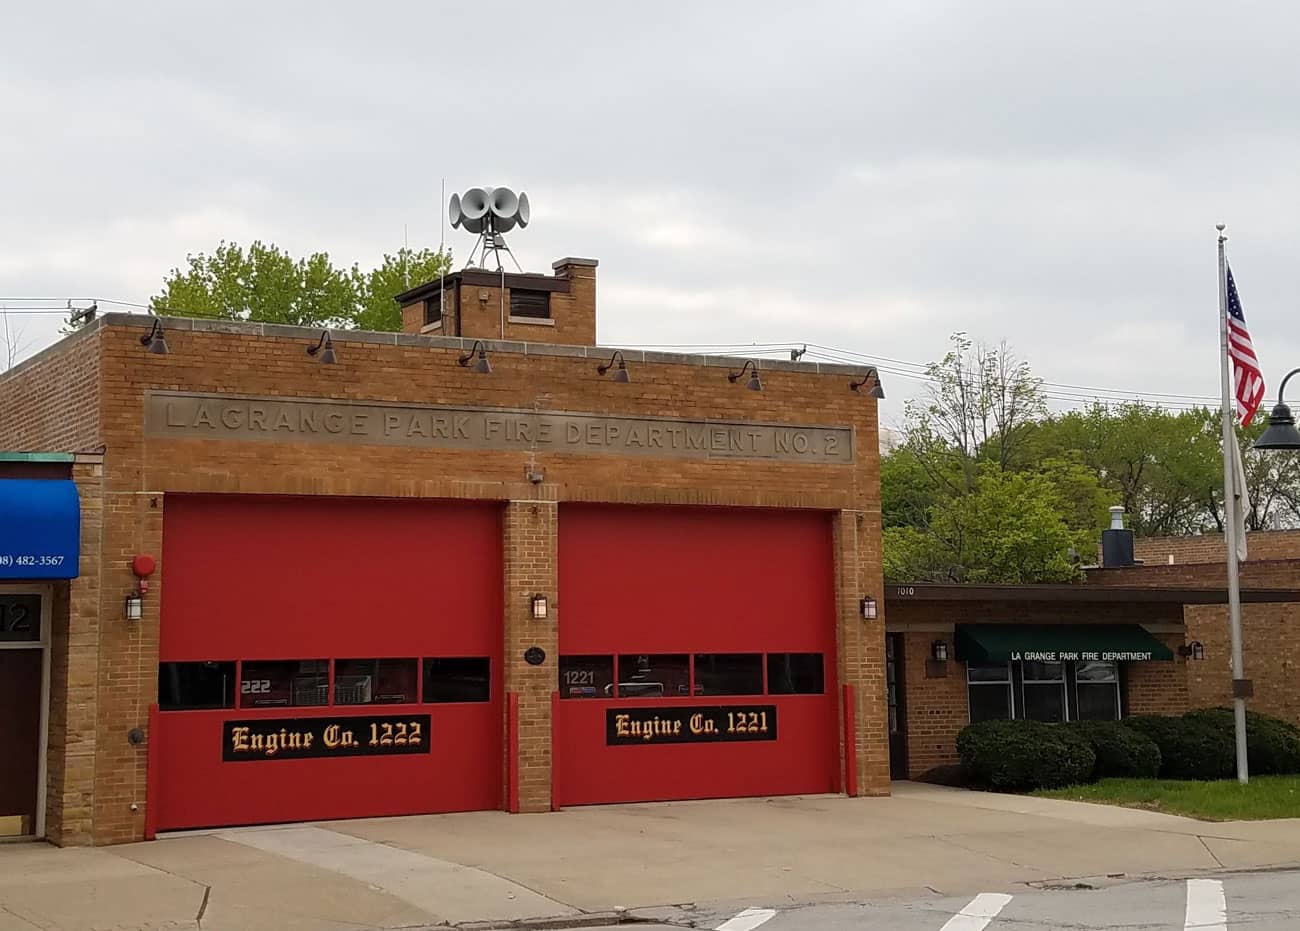 Main Fire Station in LaGrange Park, IL